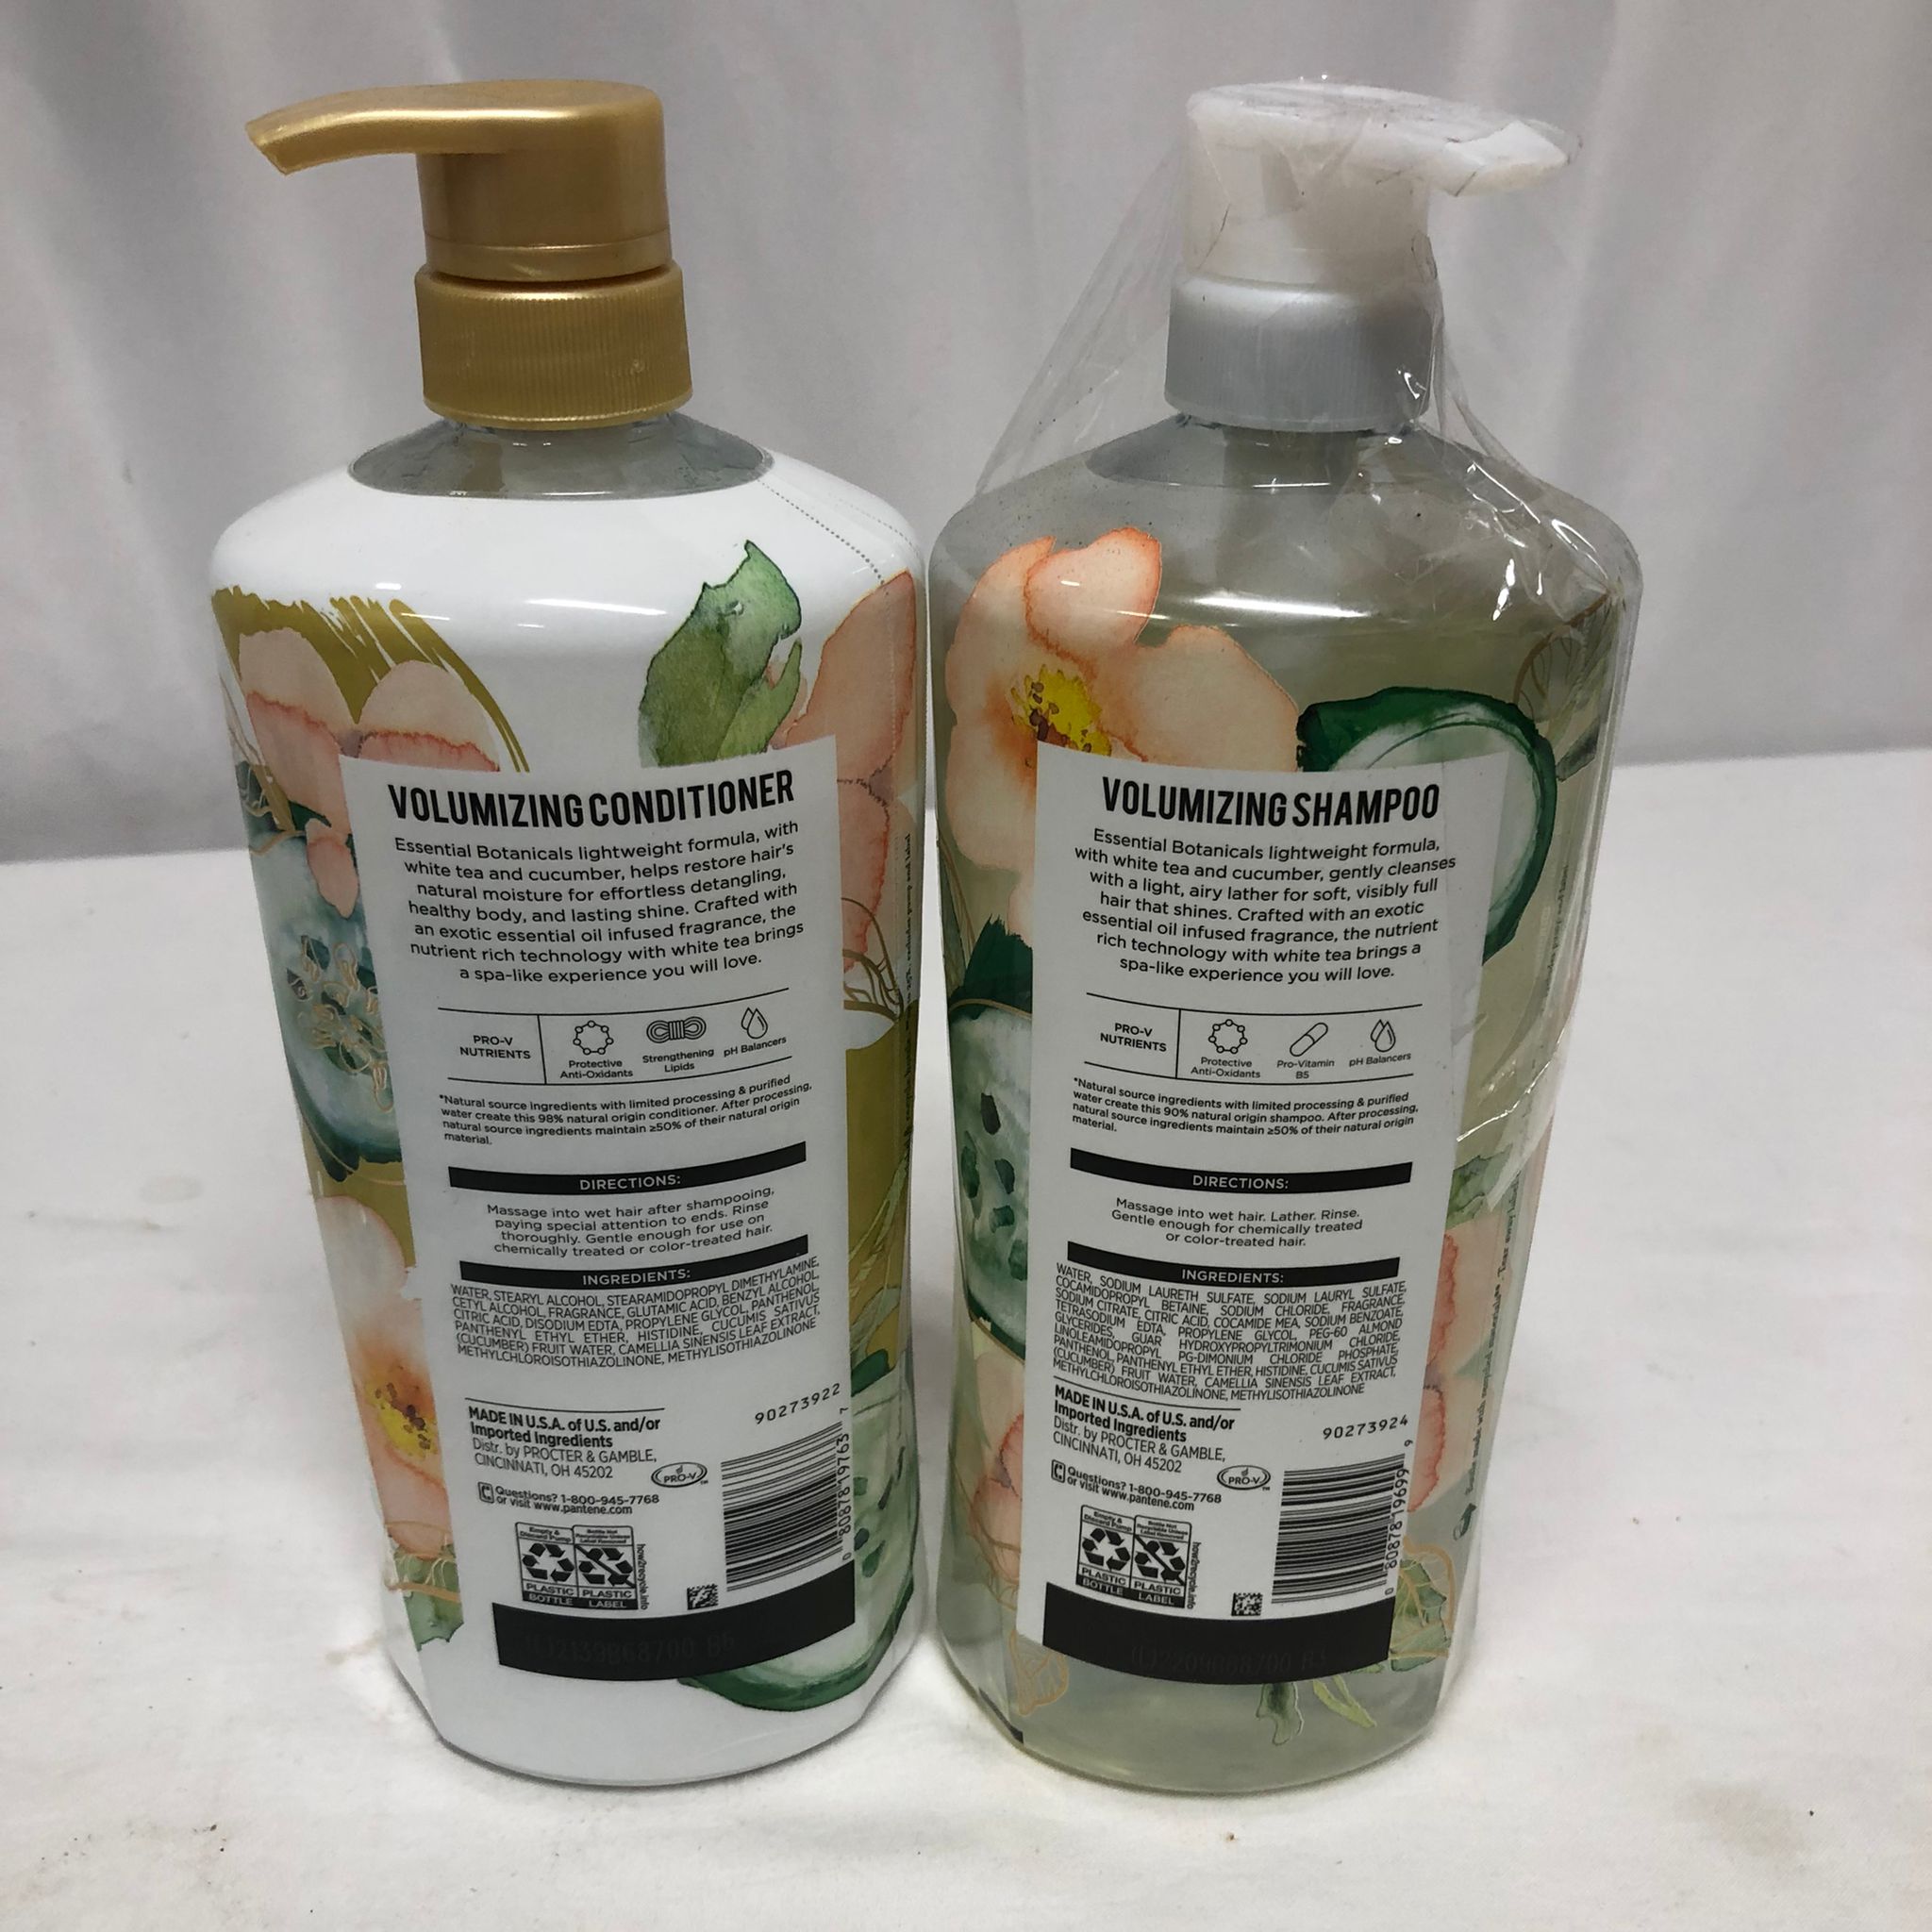 Pantene Essencials Botanicals Shampoo and Conditioner White Tea & Cucumber Set (38.2 Fl Oz)